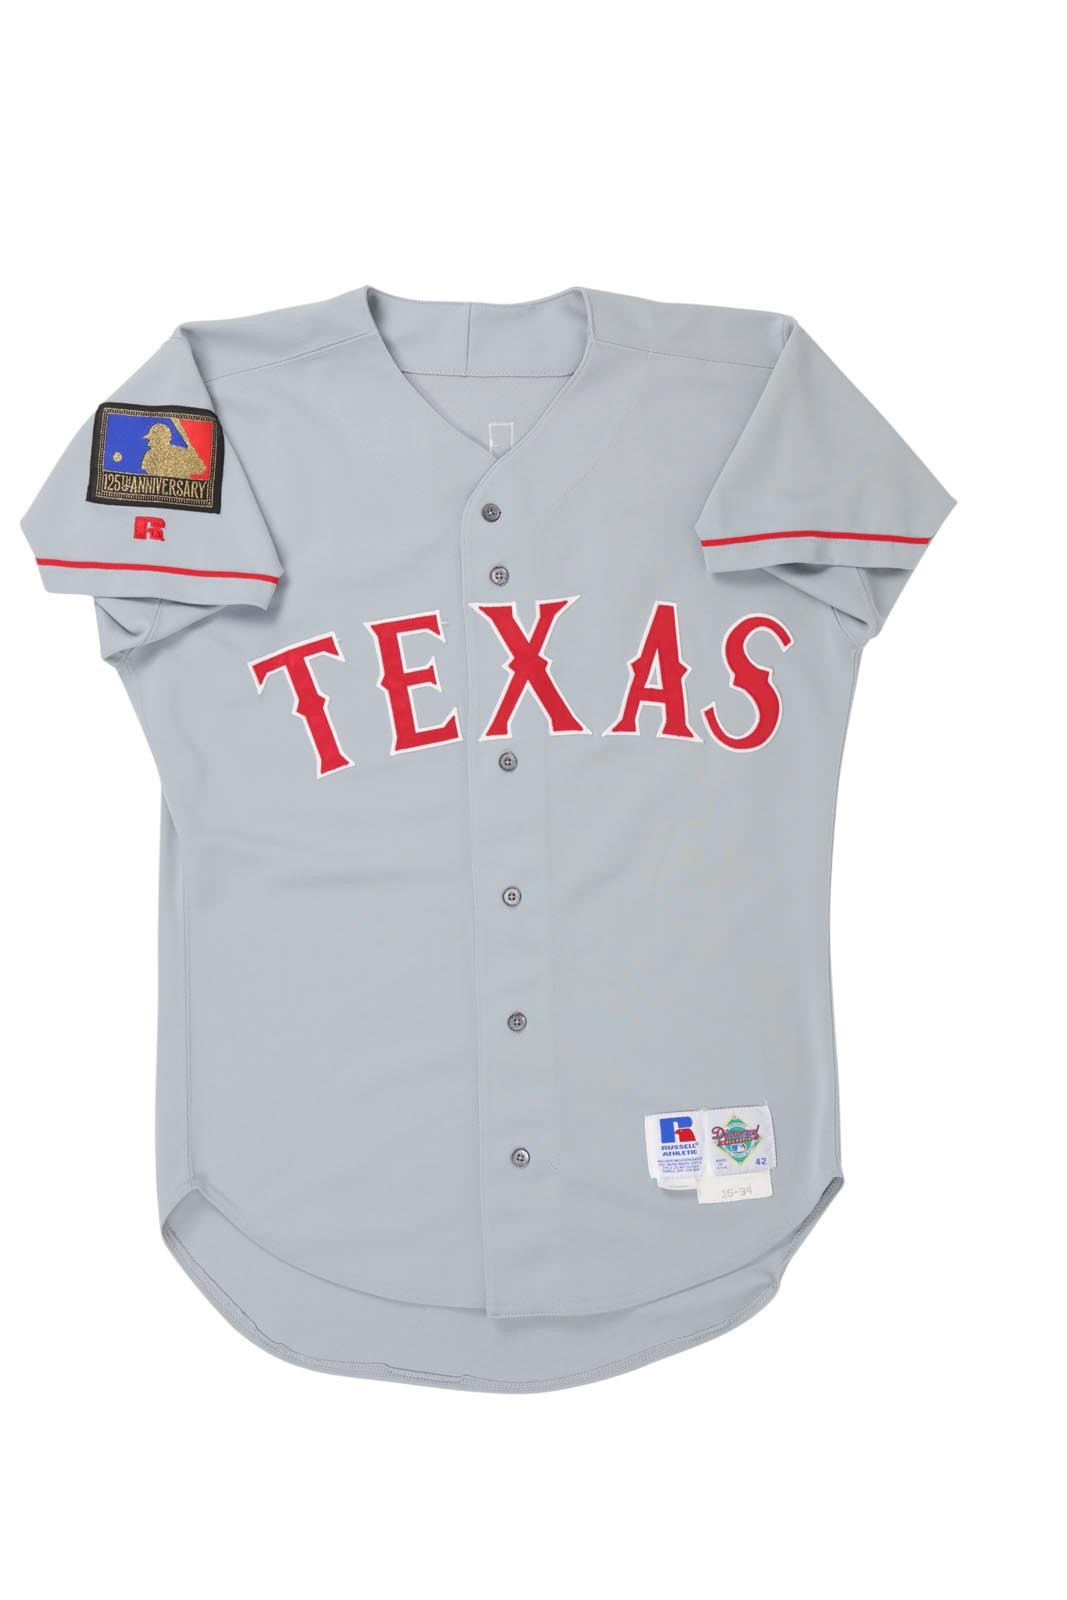 - 1994 David Hulse Texas Rangers Game Worn Jersey - 125th Anniversary Patch